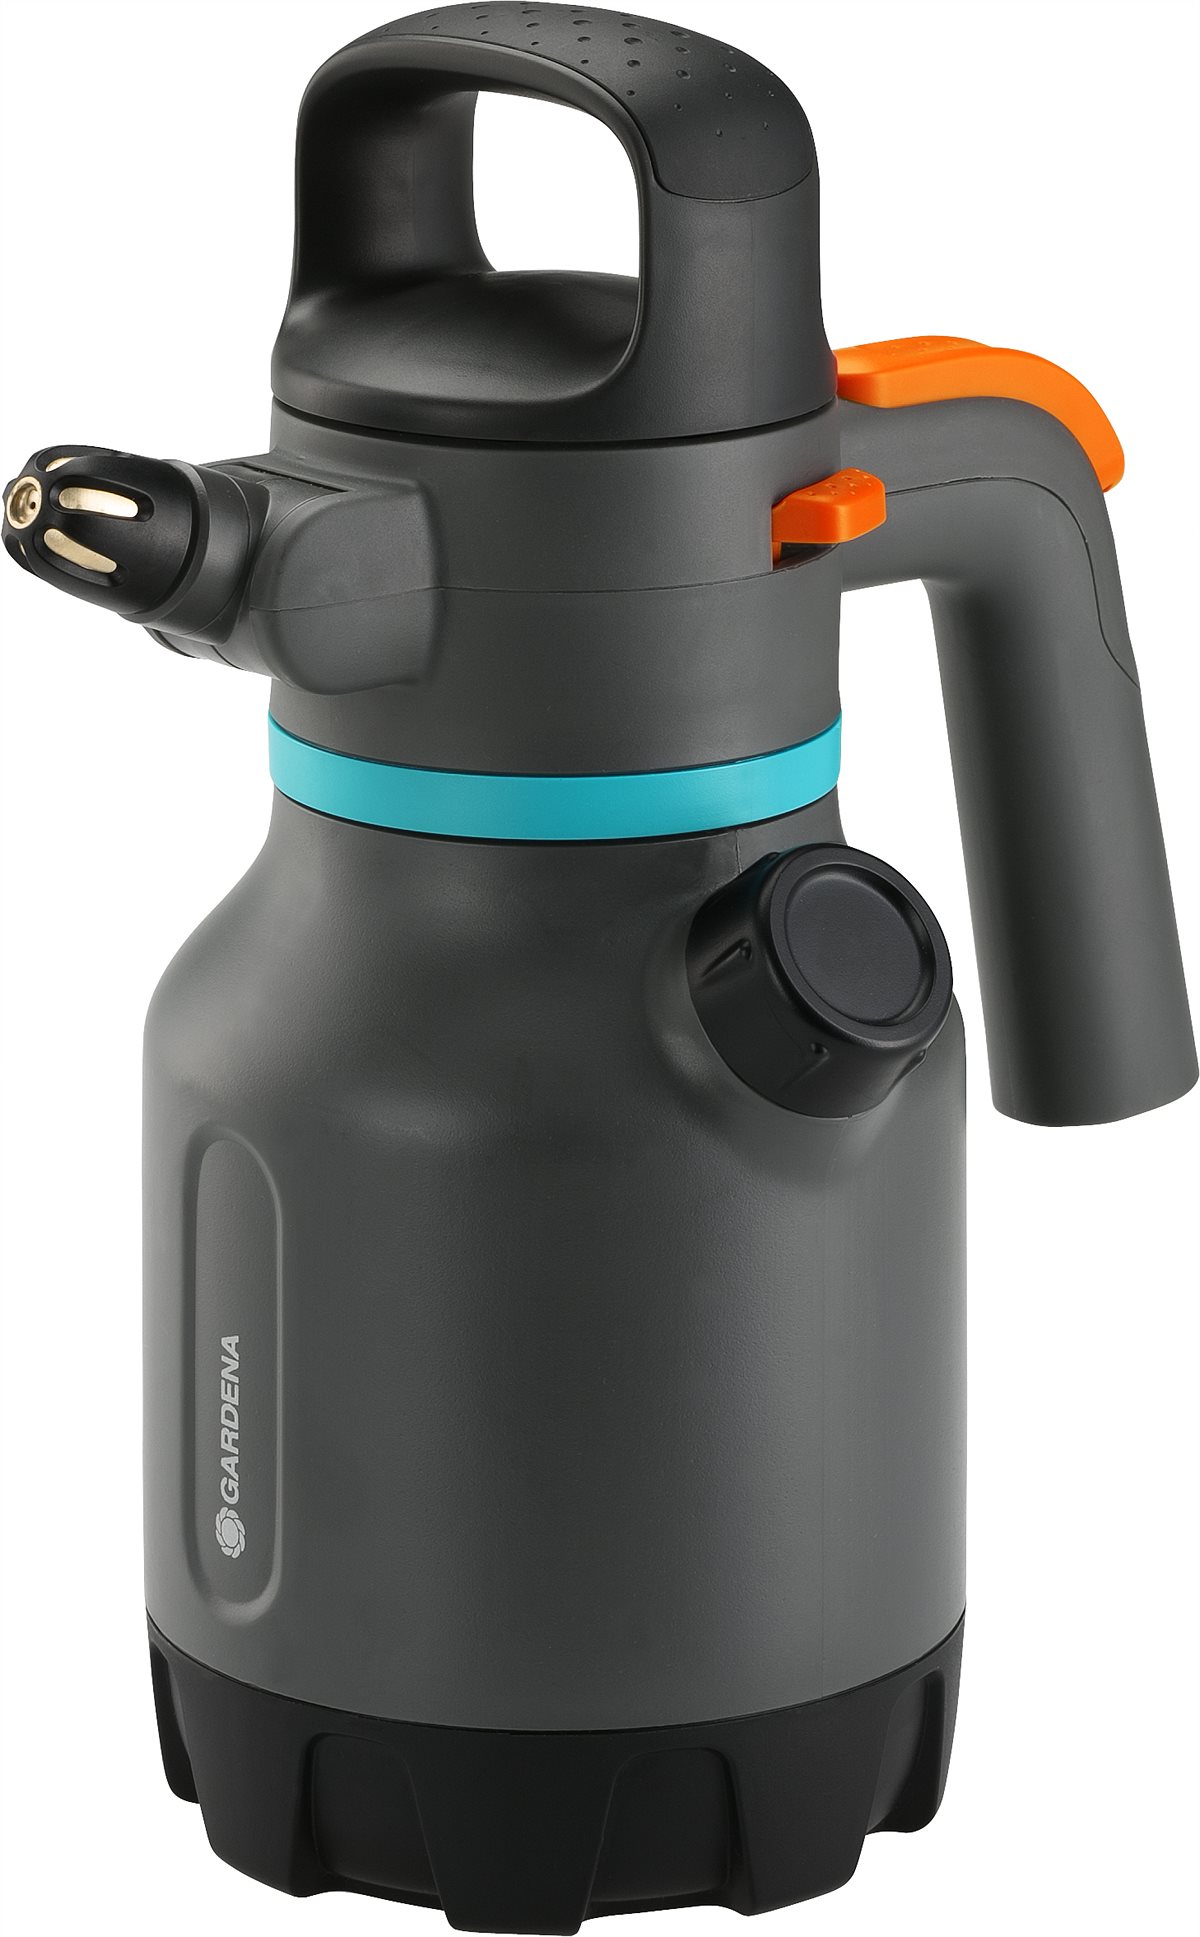 GARDENA Pressure Sprayer 1.25 L